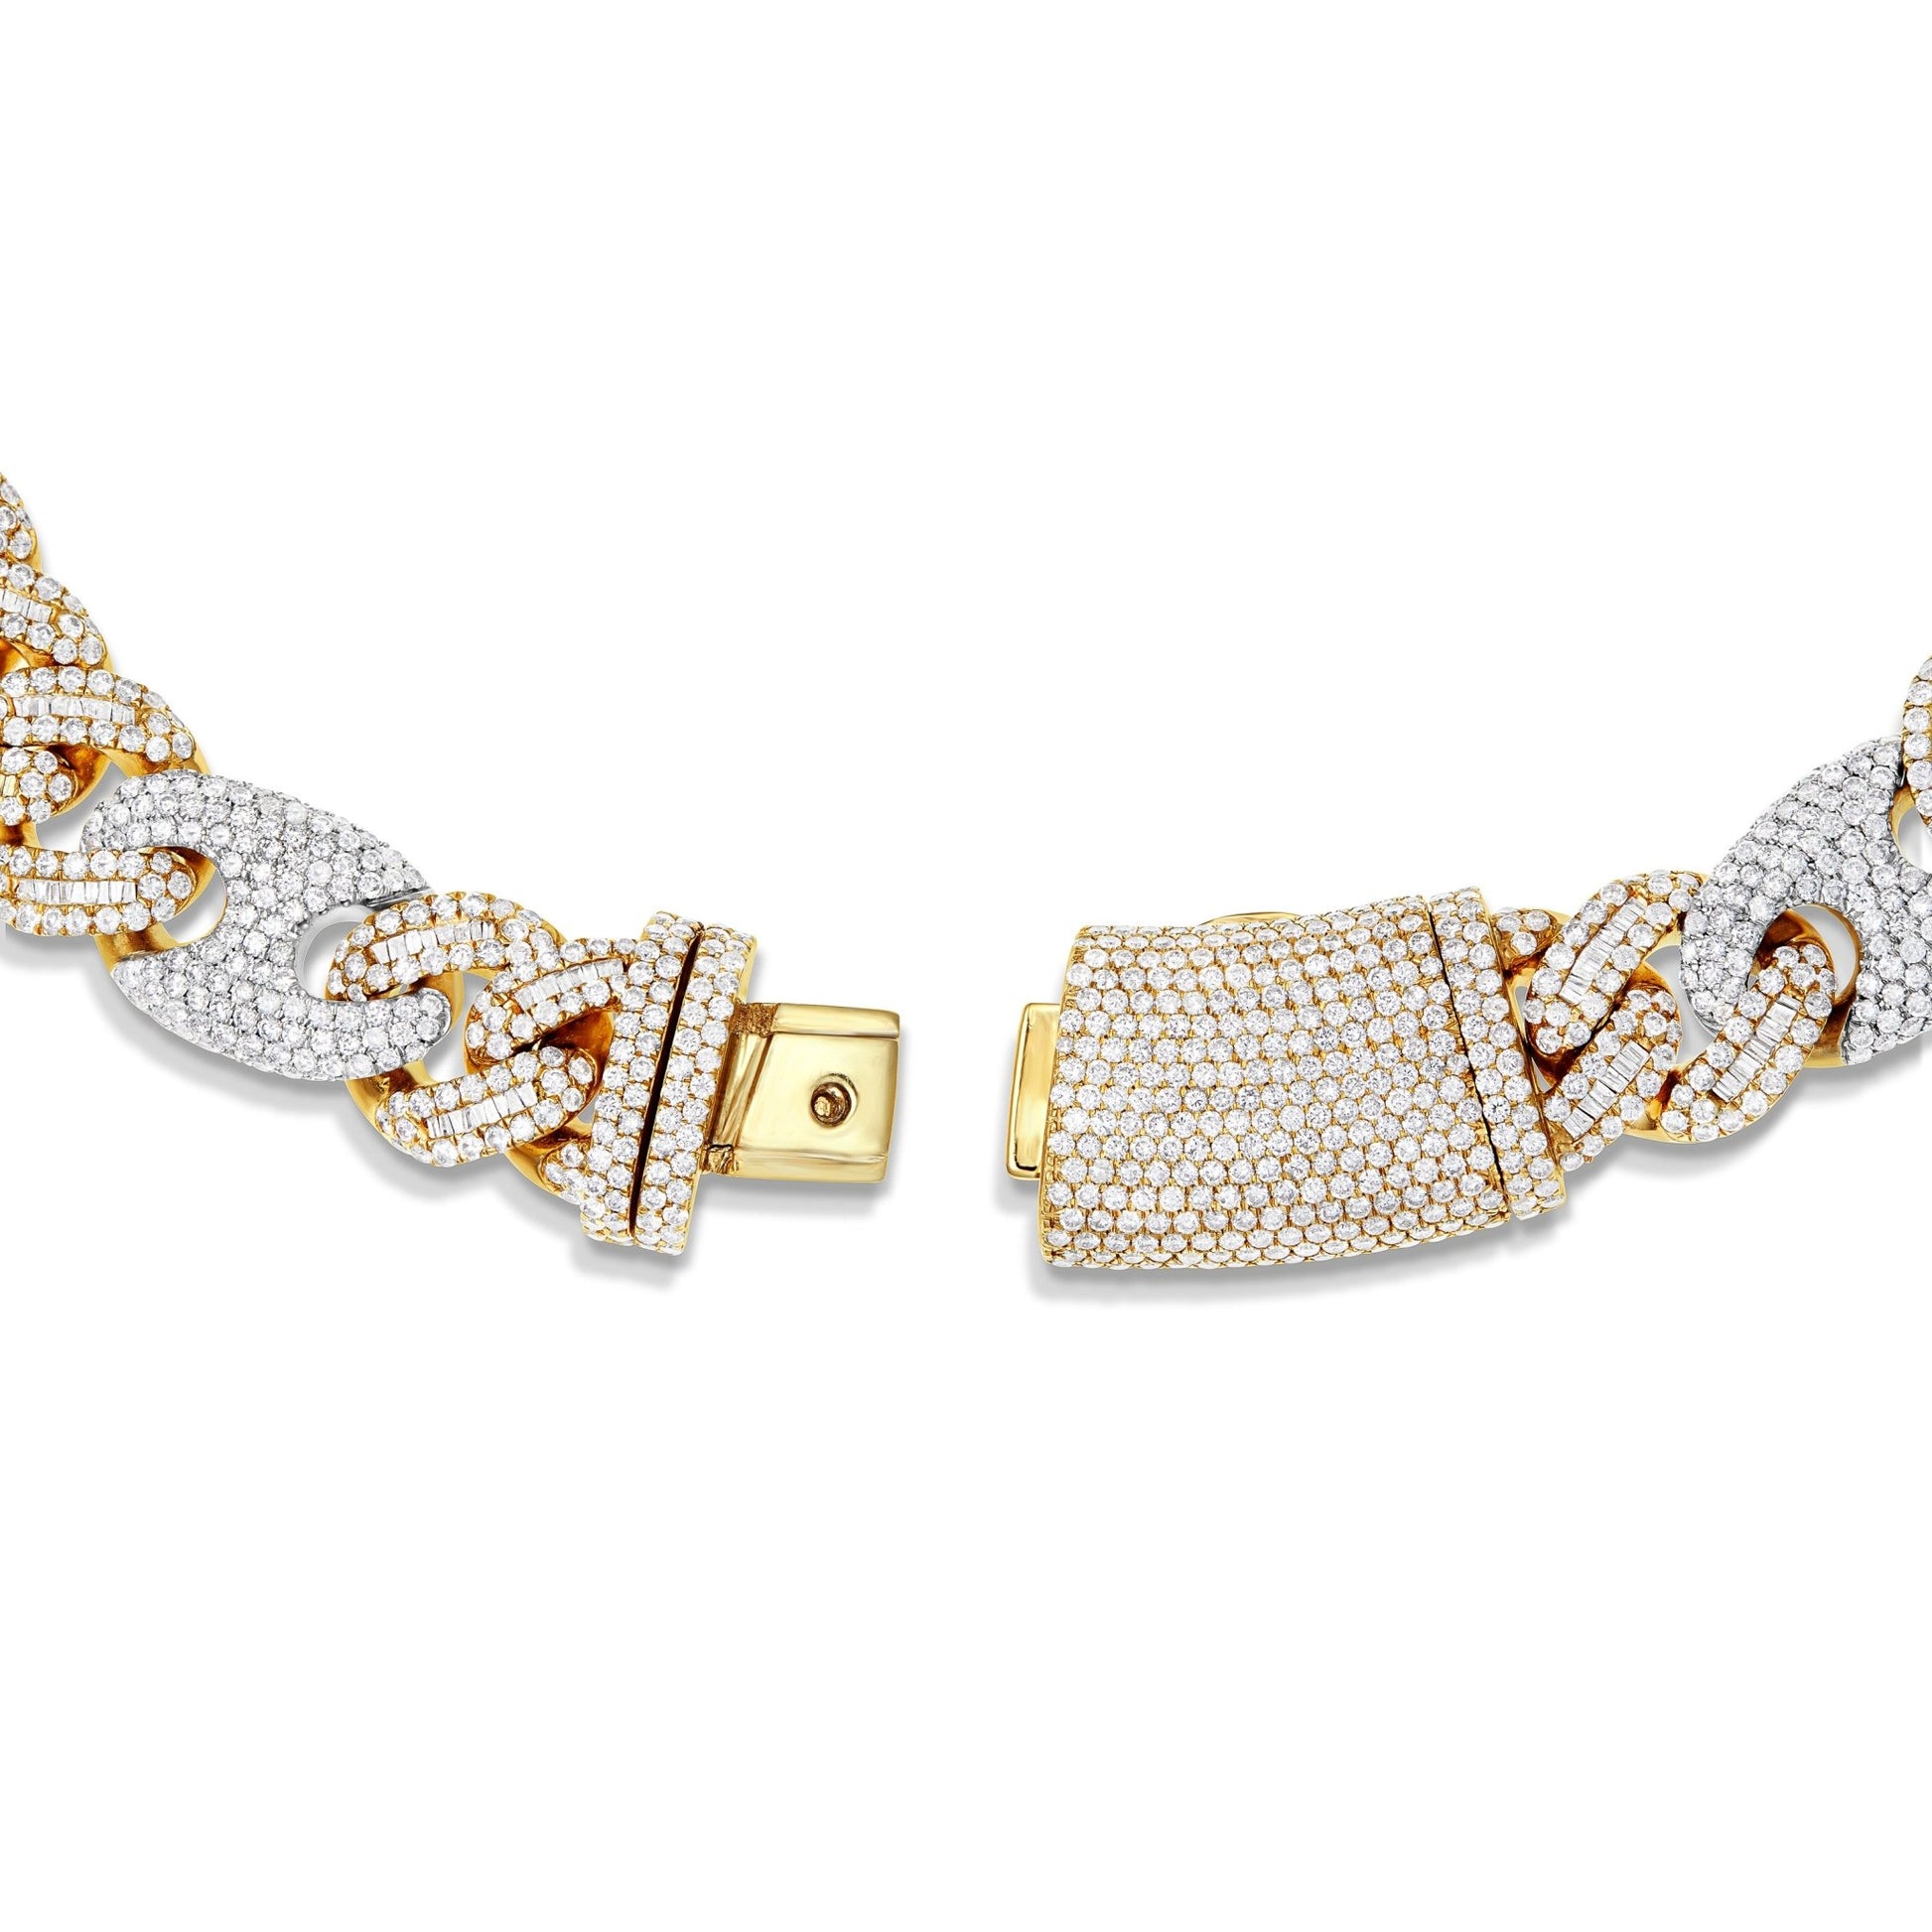 Diamond Gucci Link Chain - Shyne Jewelers DIAGUCCICHAIN Shyne Jewelers